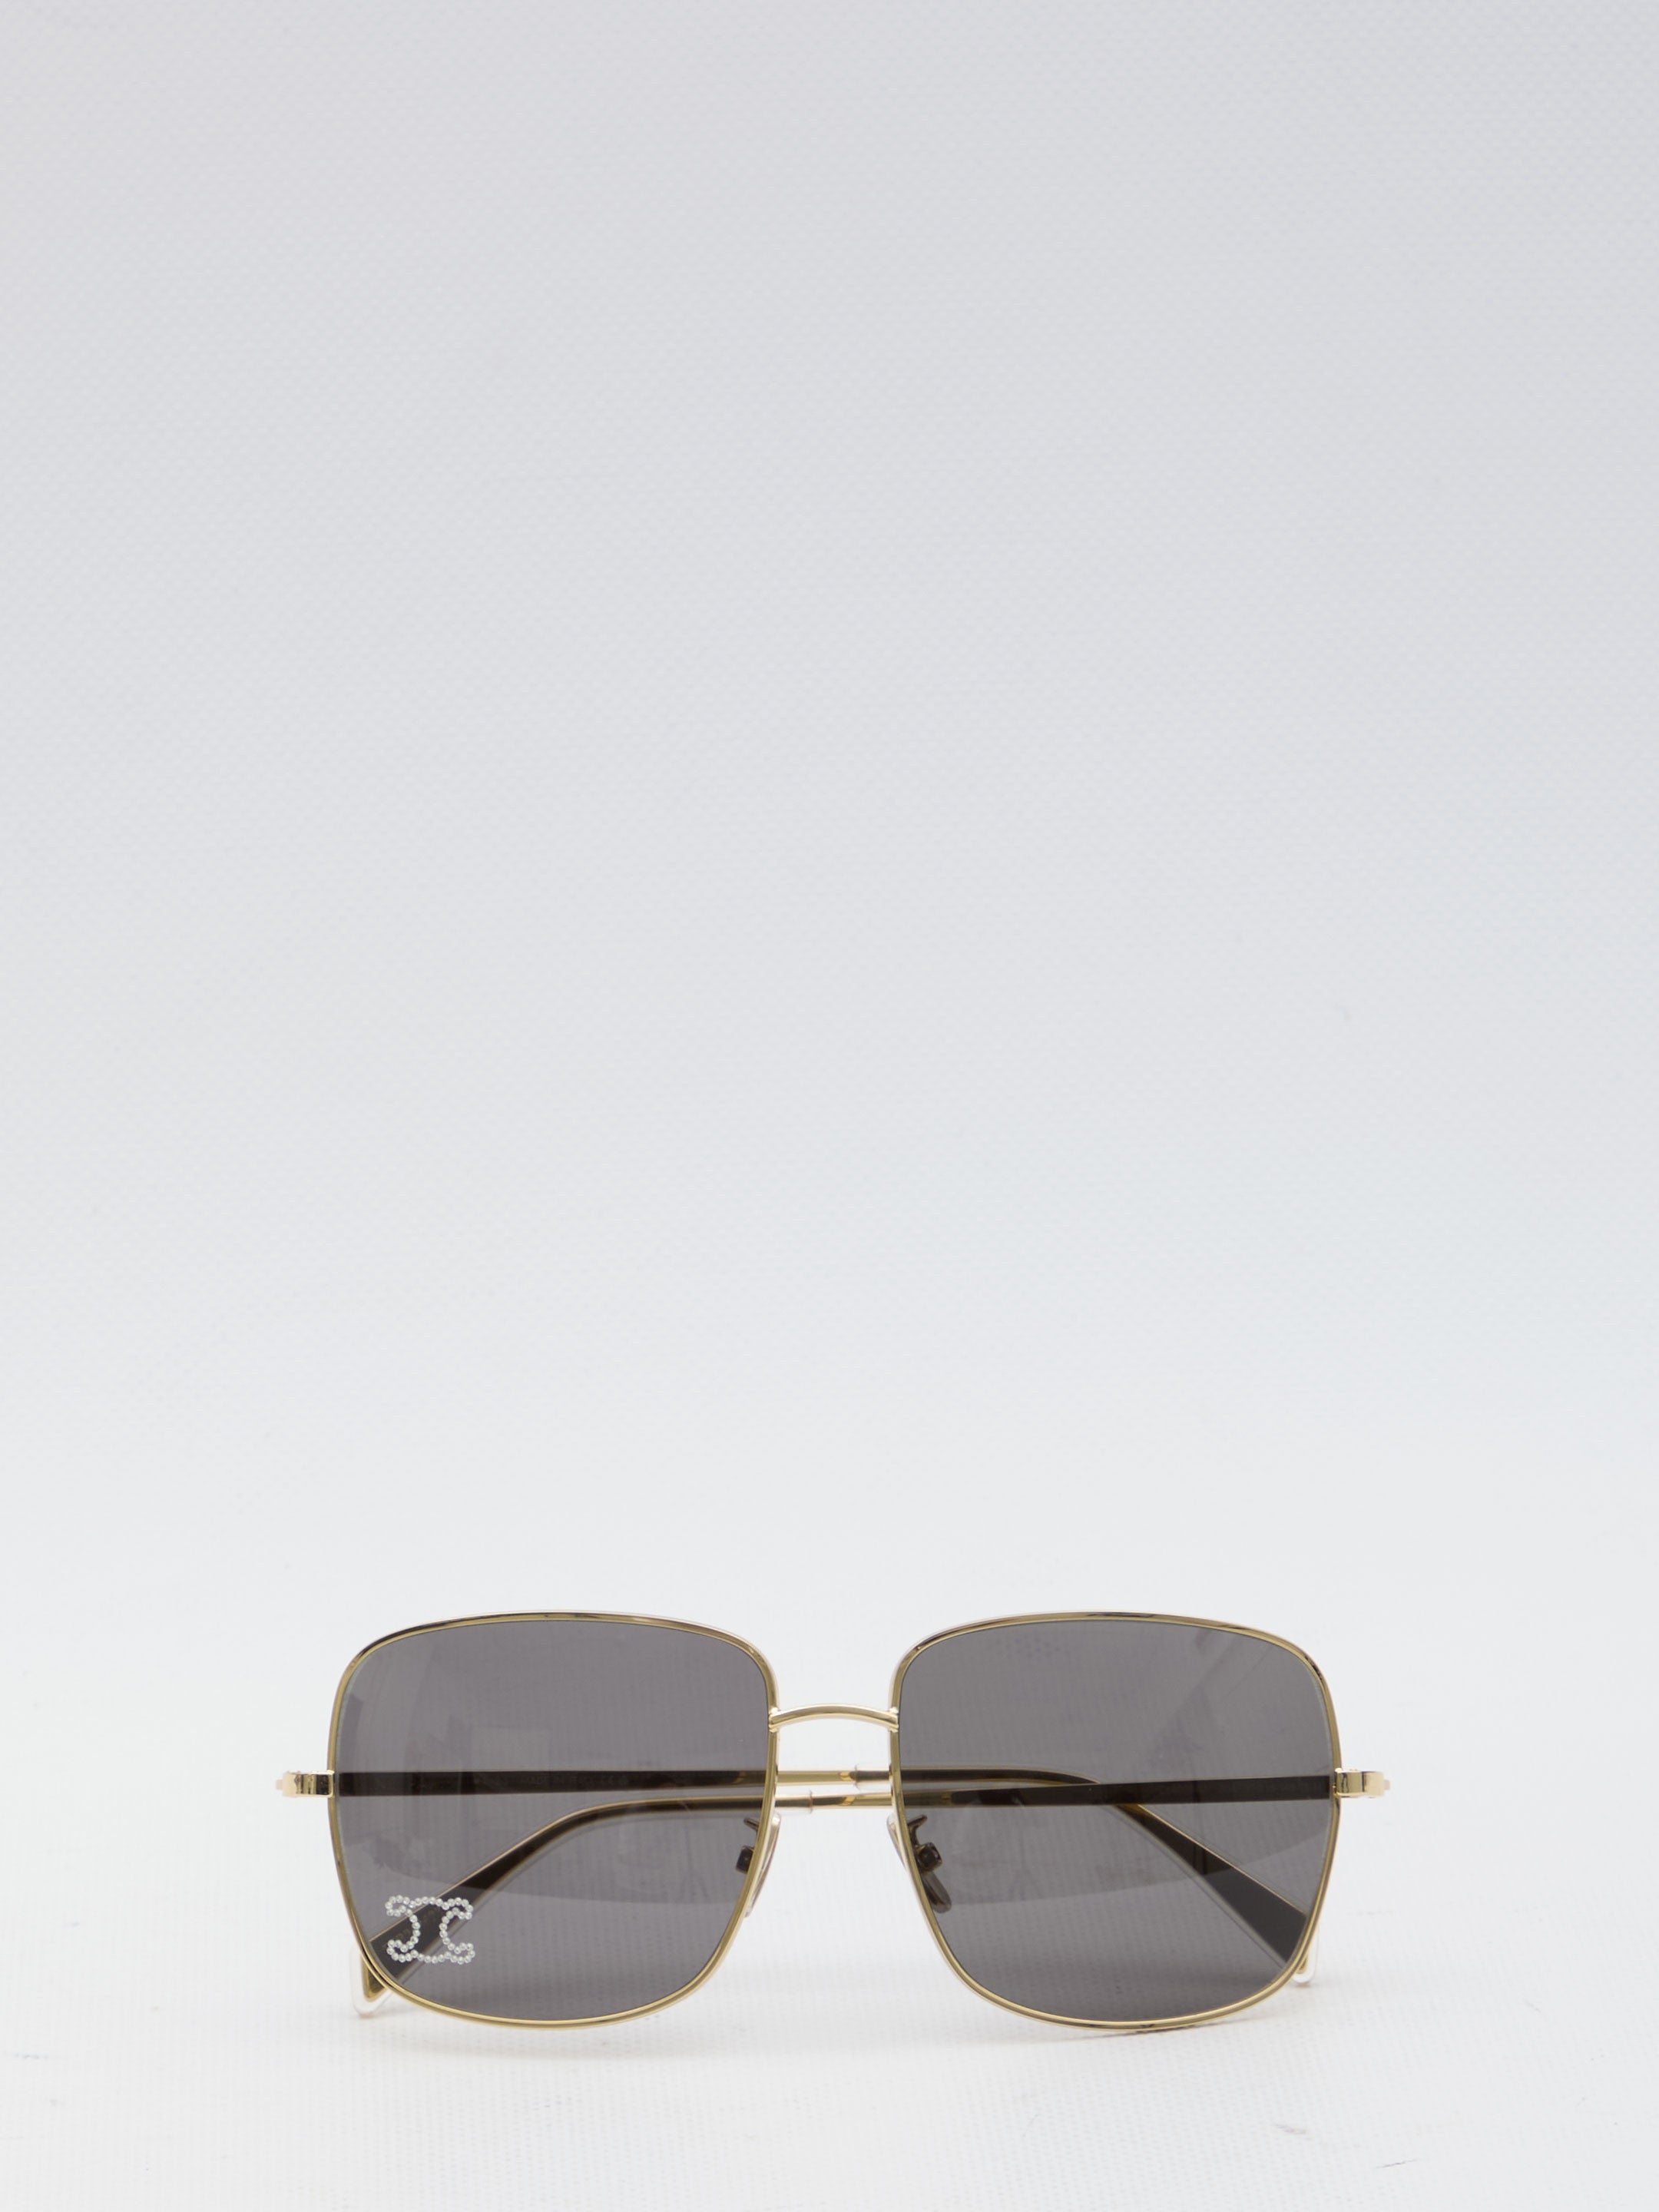 Triomphe Rhinestone 01 sunglasses